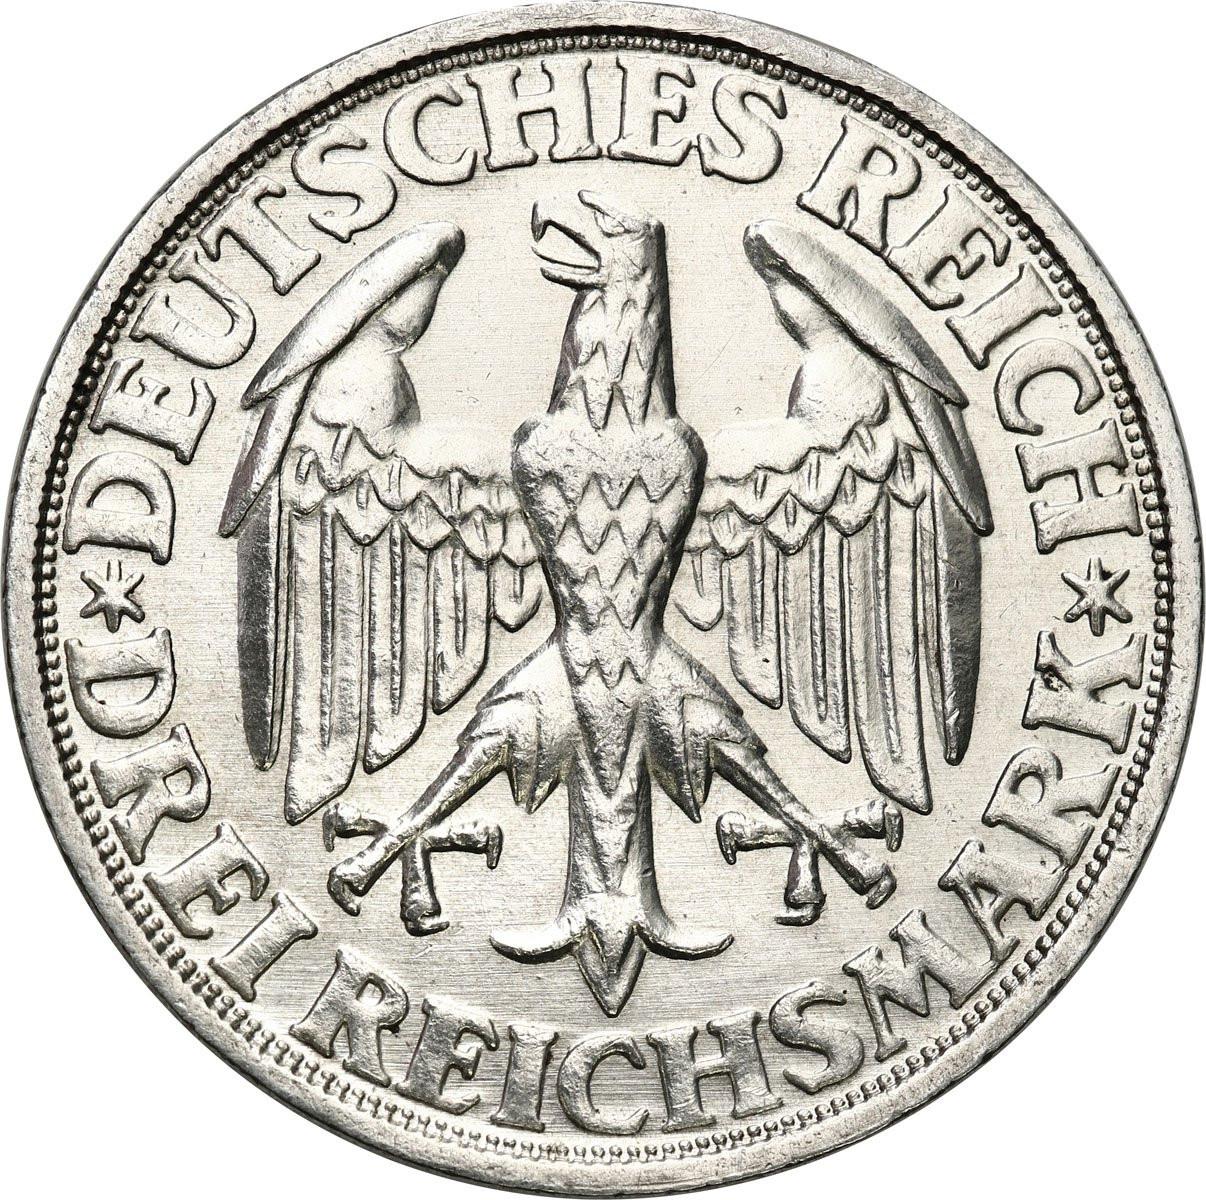 Niemcy, Weimar. 3 marki 1928 D, Monachium - 1.000 lat Dinkelsbühl - RZADKIE